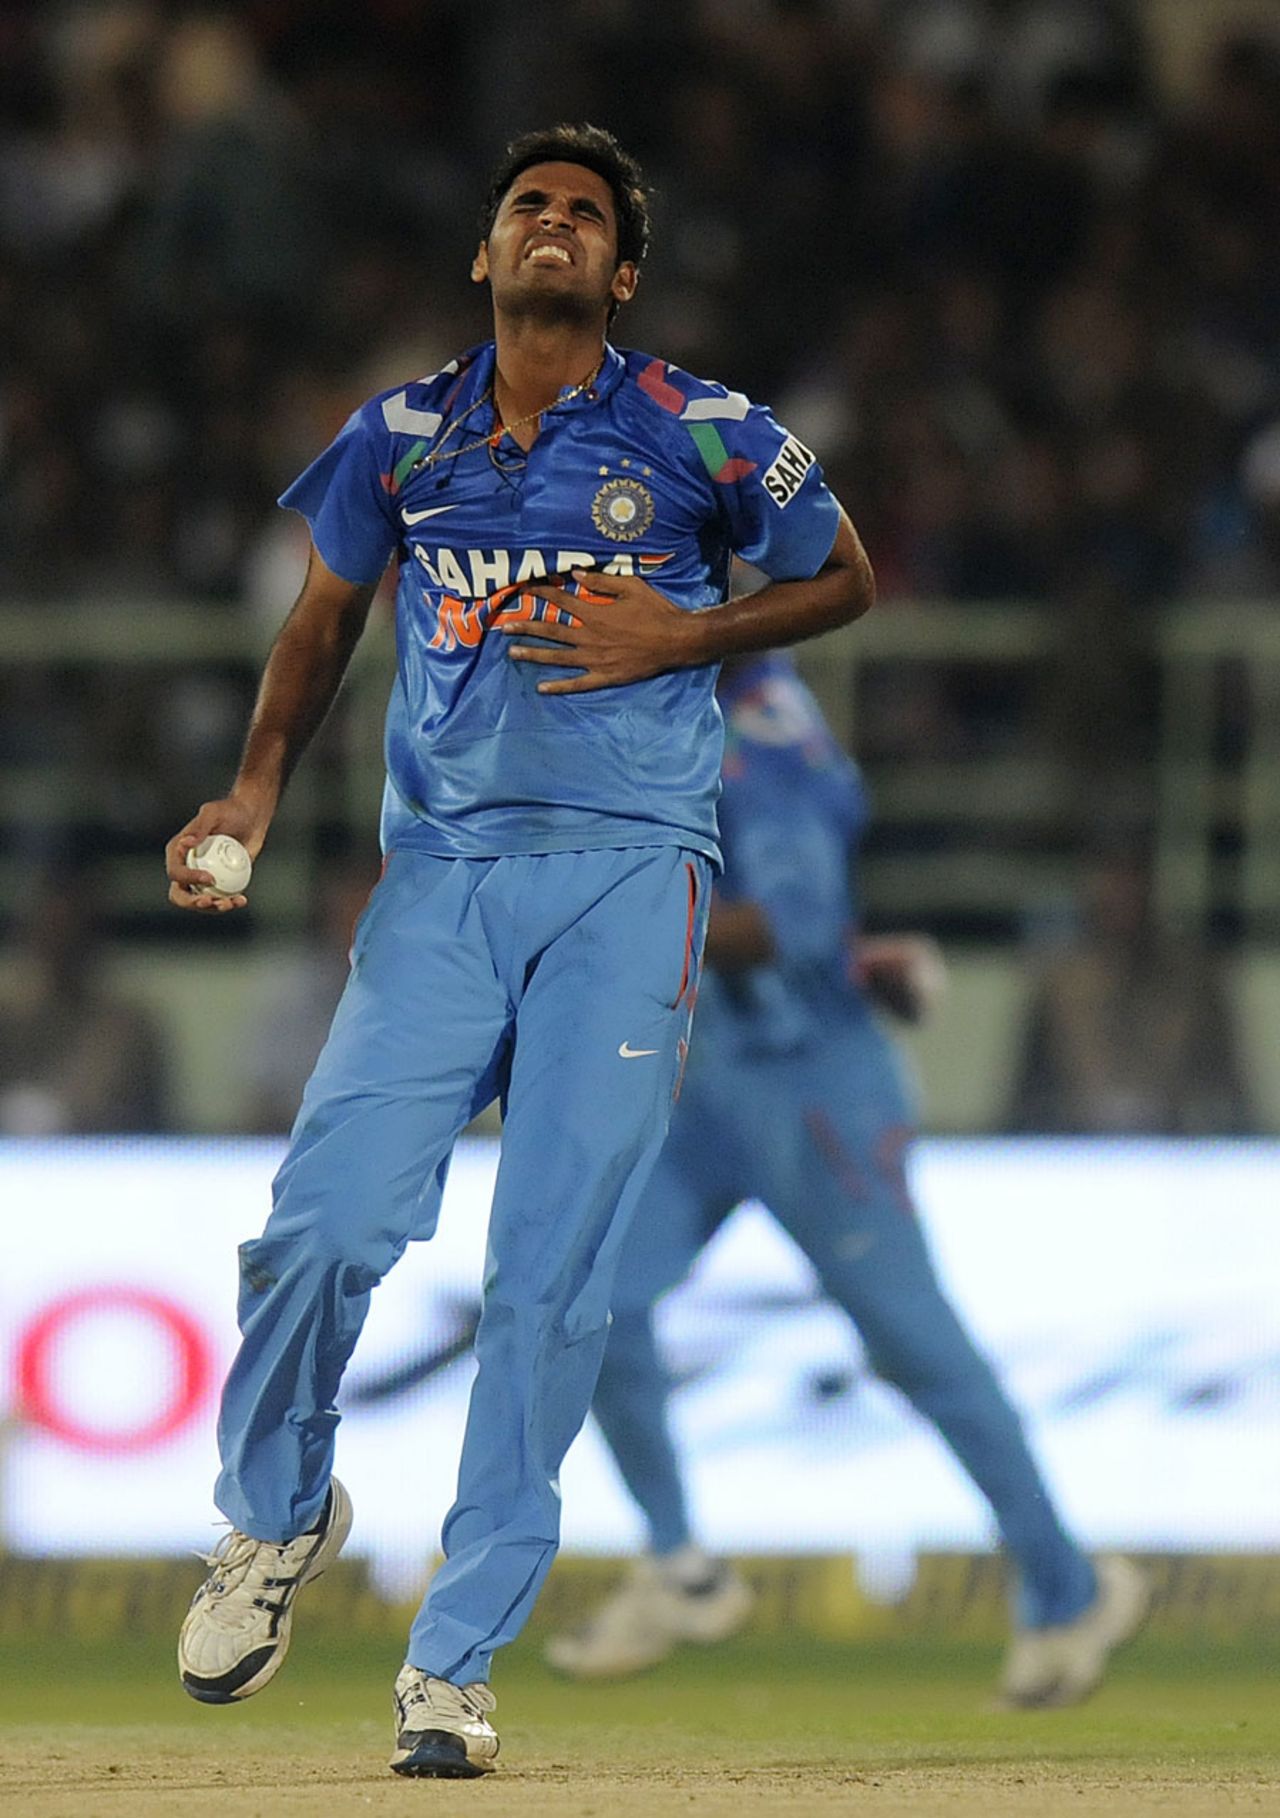 Bhuvneshwar Kumar reacts after being struck in the chest, India v West Indies, 2nd ODI, Visakhapatnam, November 24, 2013